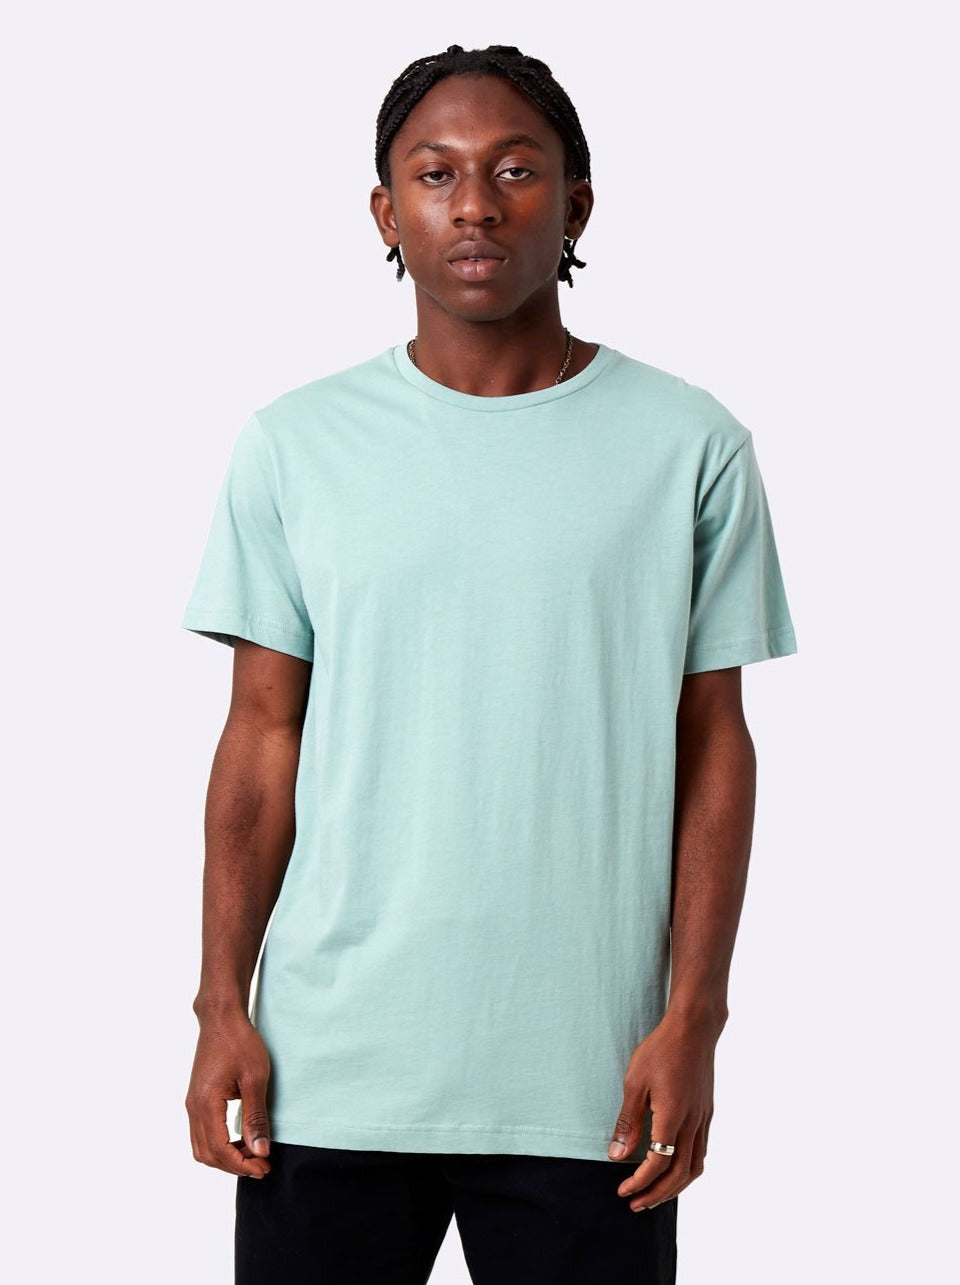 Mr Simple - Reginald T Shirt - Sea Green